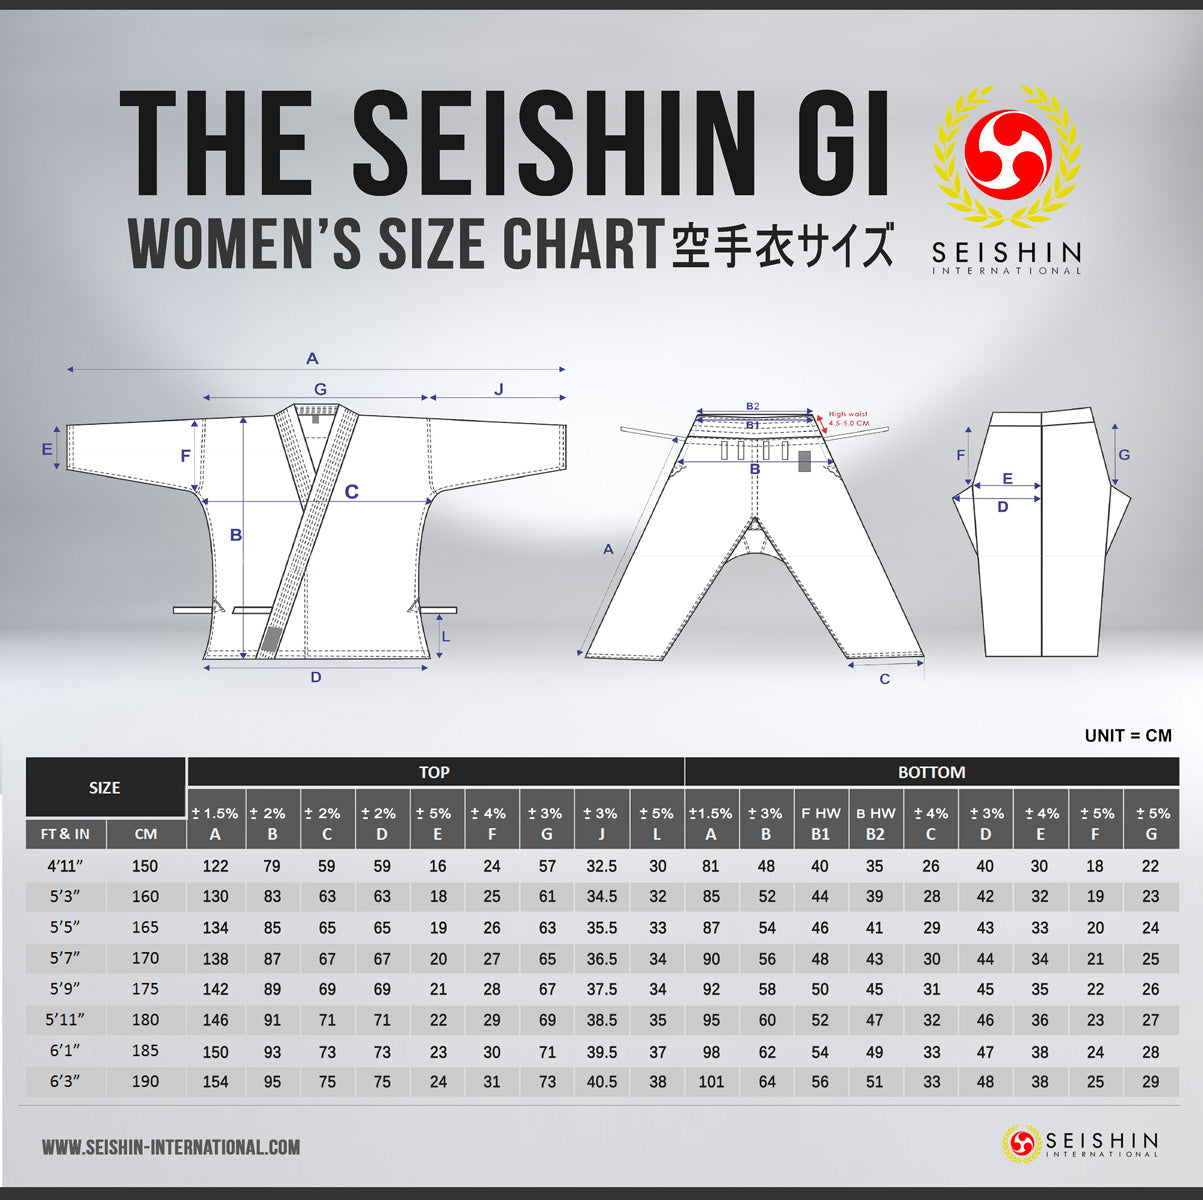 SEISHIN GI SIZE CHART WOMEN